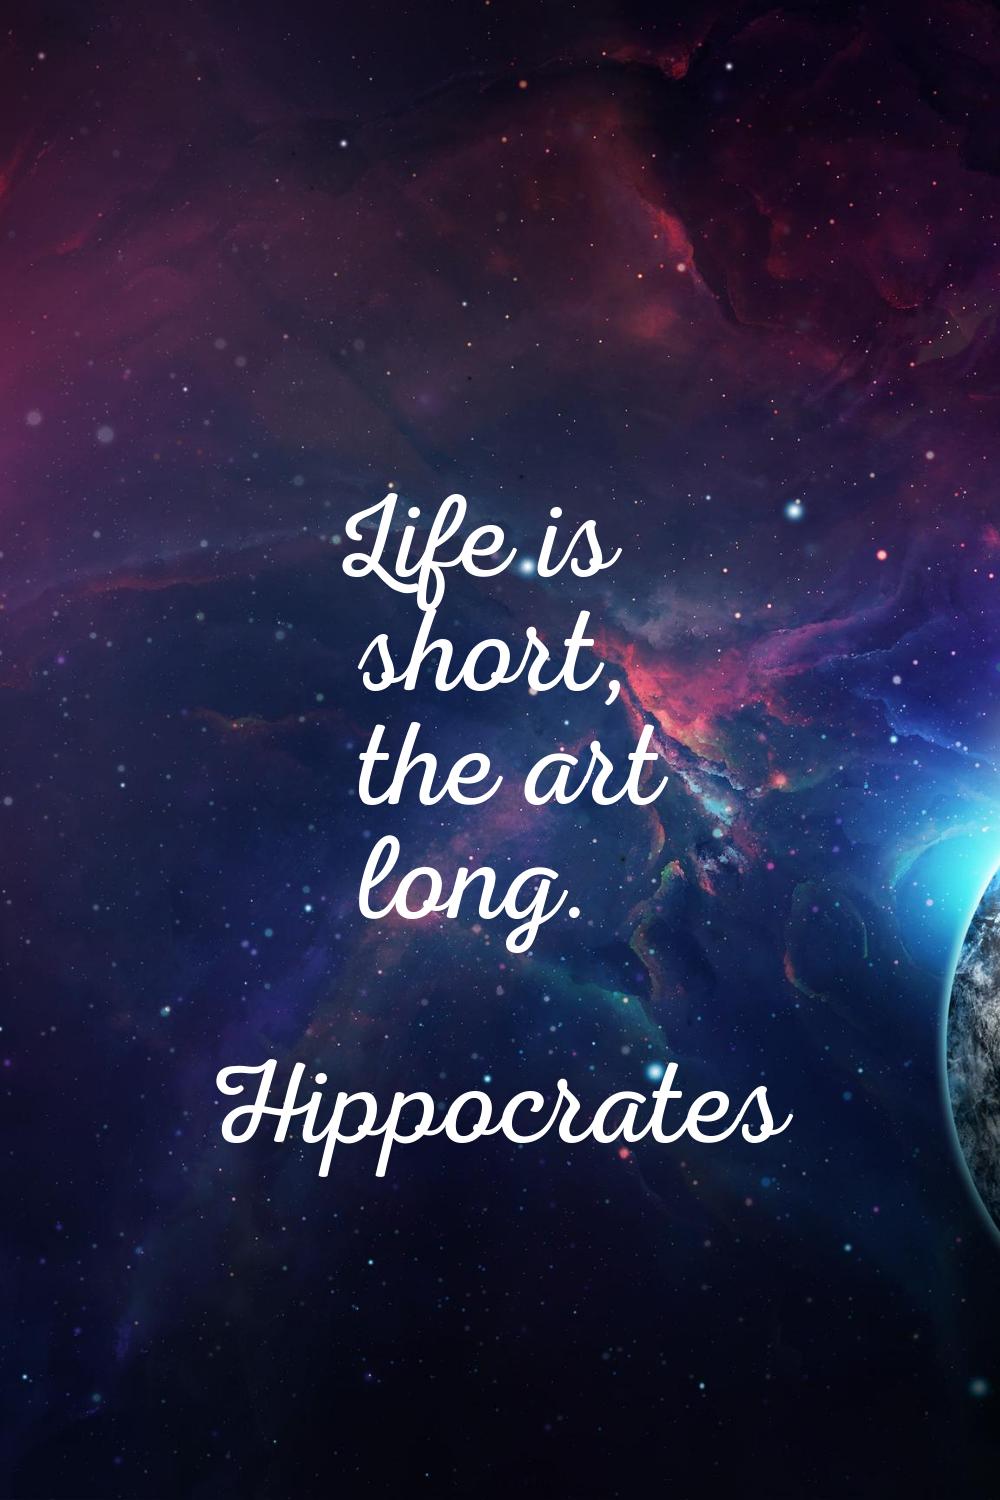 Life is short, the art long.